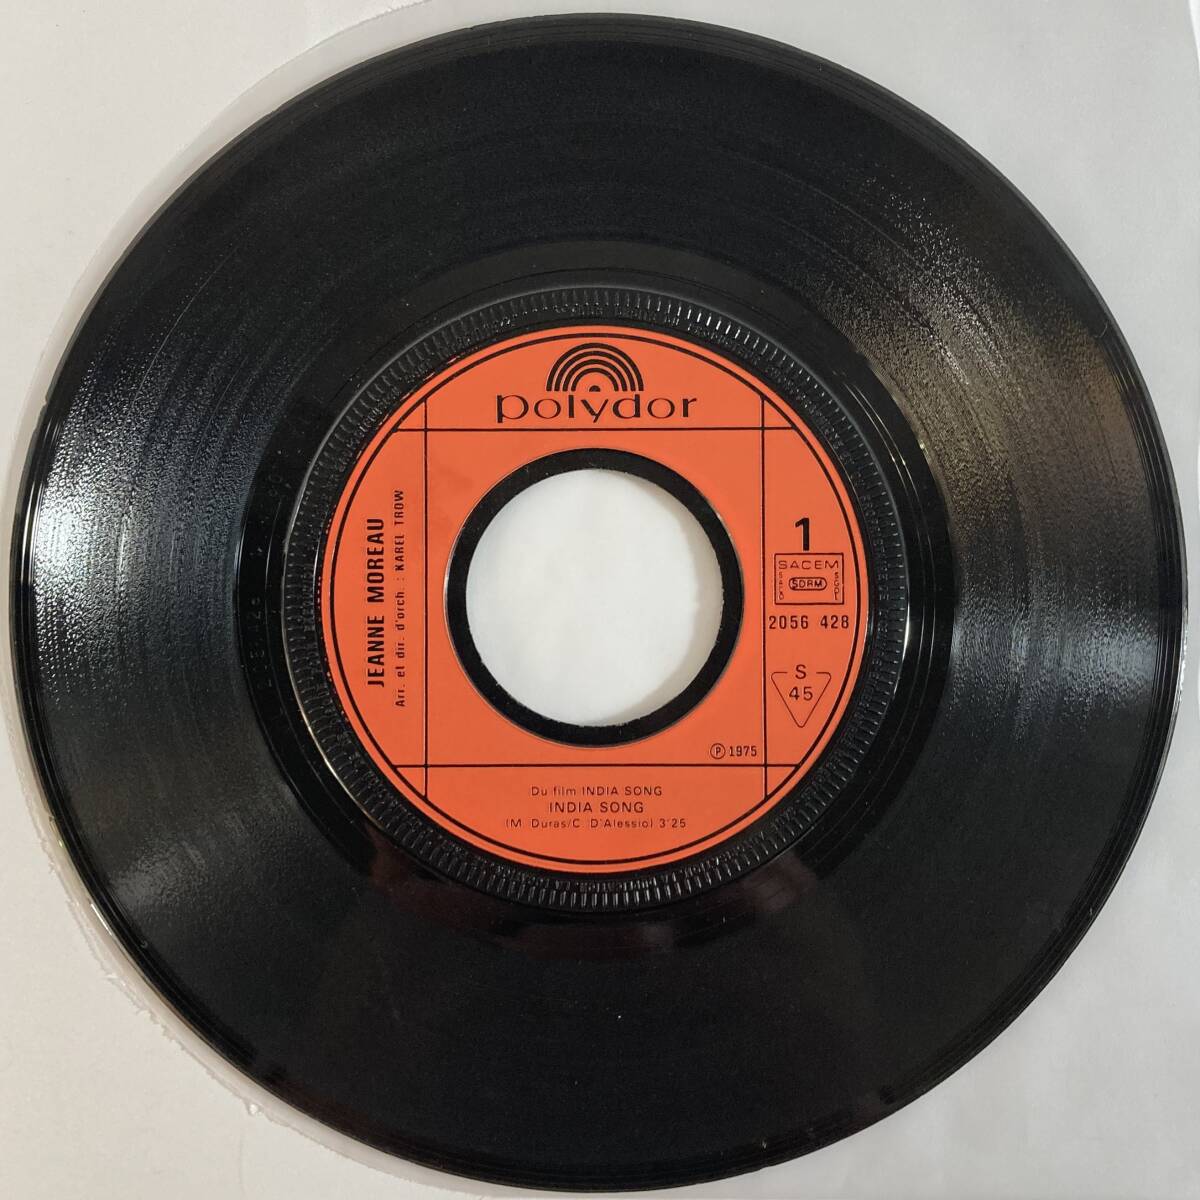  Jean n*mo low (Jeanne Moreau) / India Song c/w Rumba es iles / Tango-Tango. record EP Polydor 2056 428